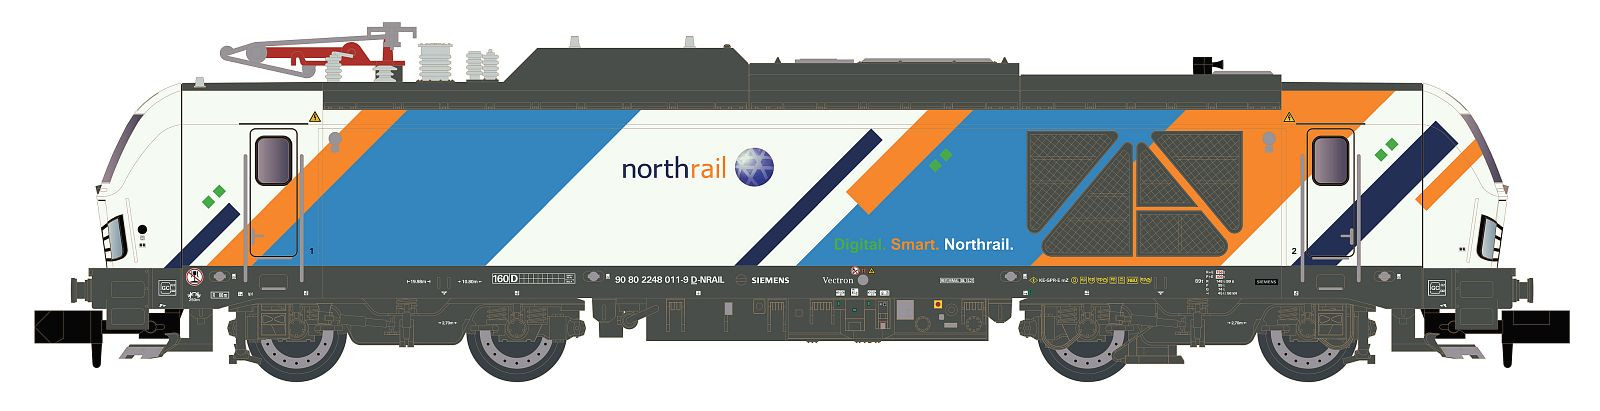 Paribus-Northrail BR248 Vectron Dual Mode Locomotive VI